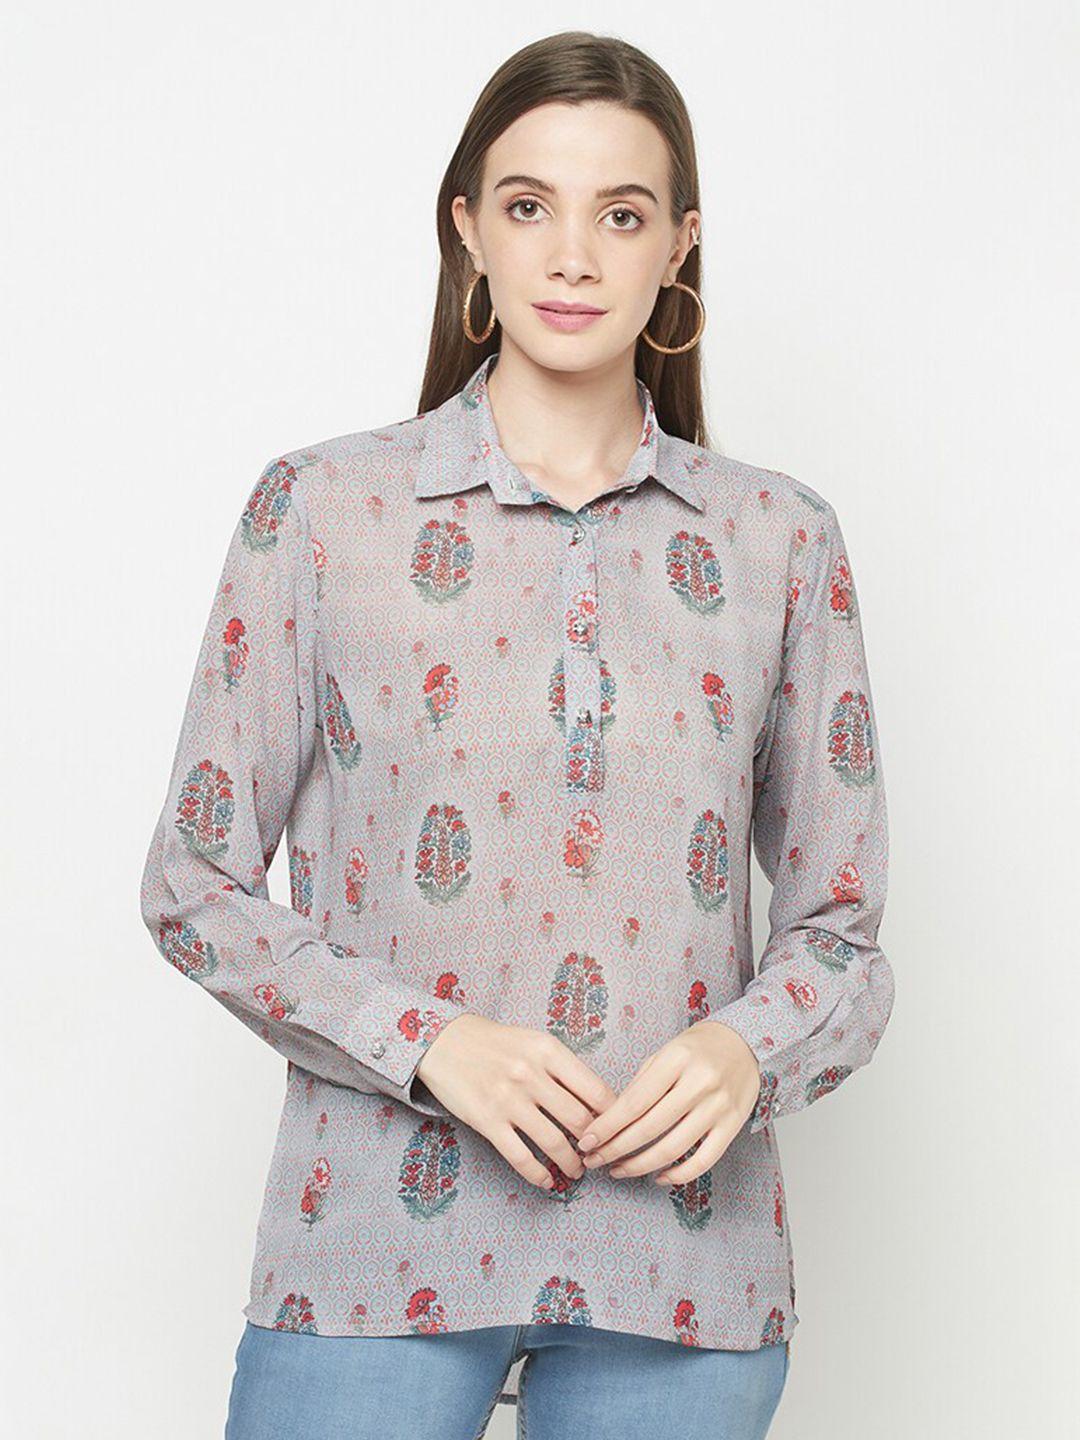 safaa grey & pink print georgette shirt style top